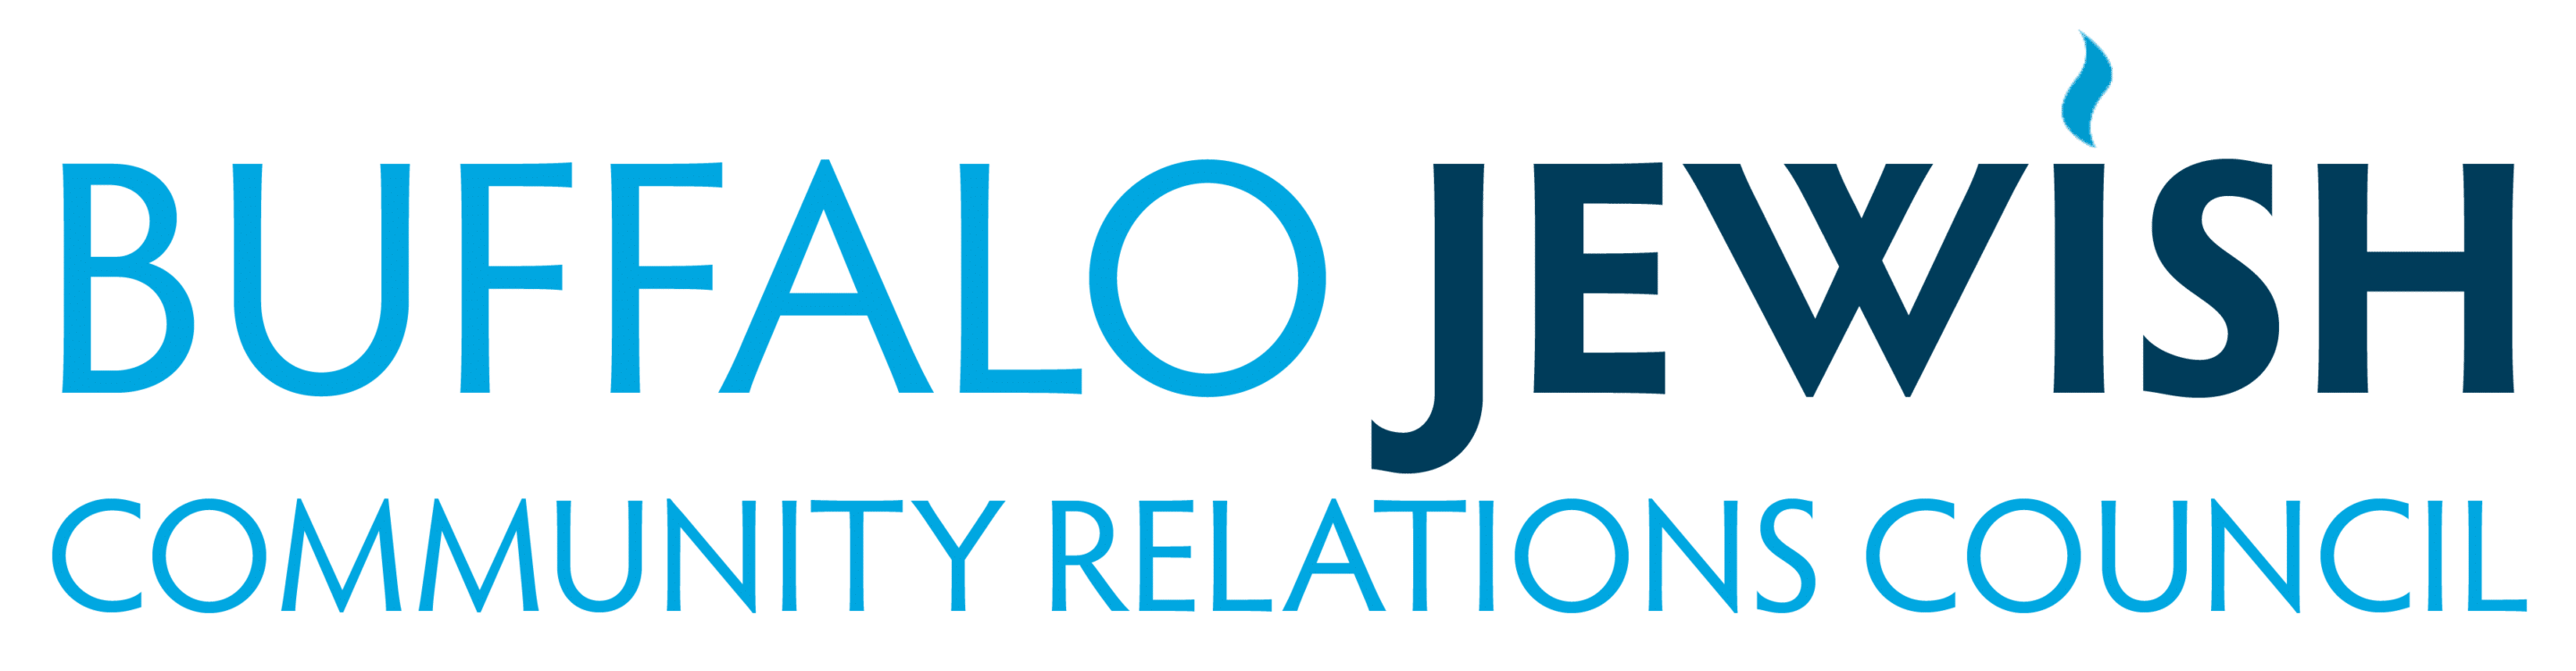 Building a Sustainable Buffalo - Buffalo JCRC Logo 1